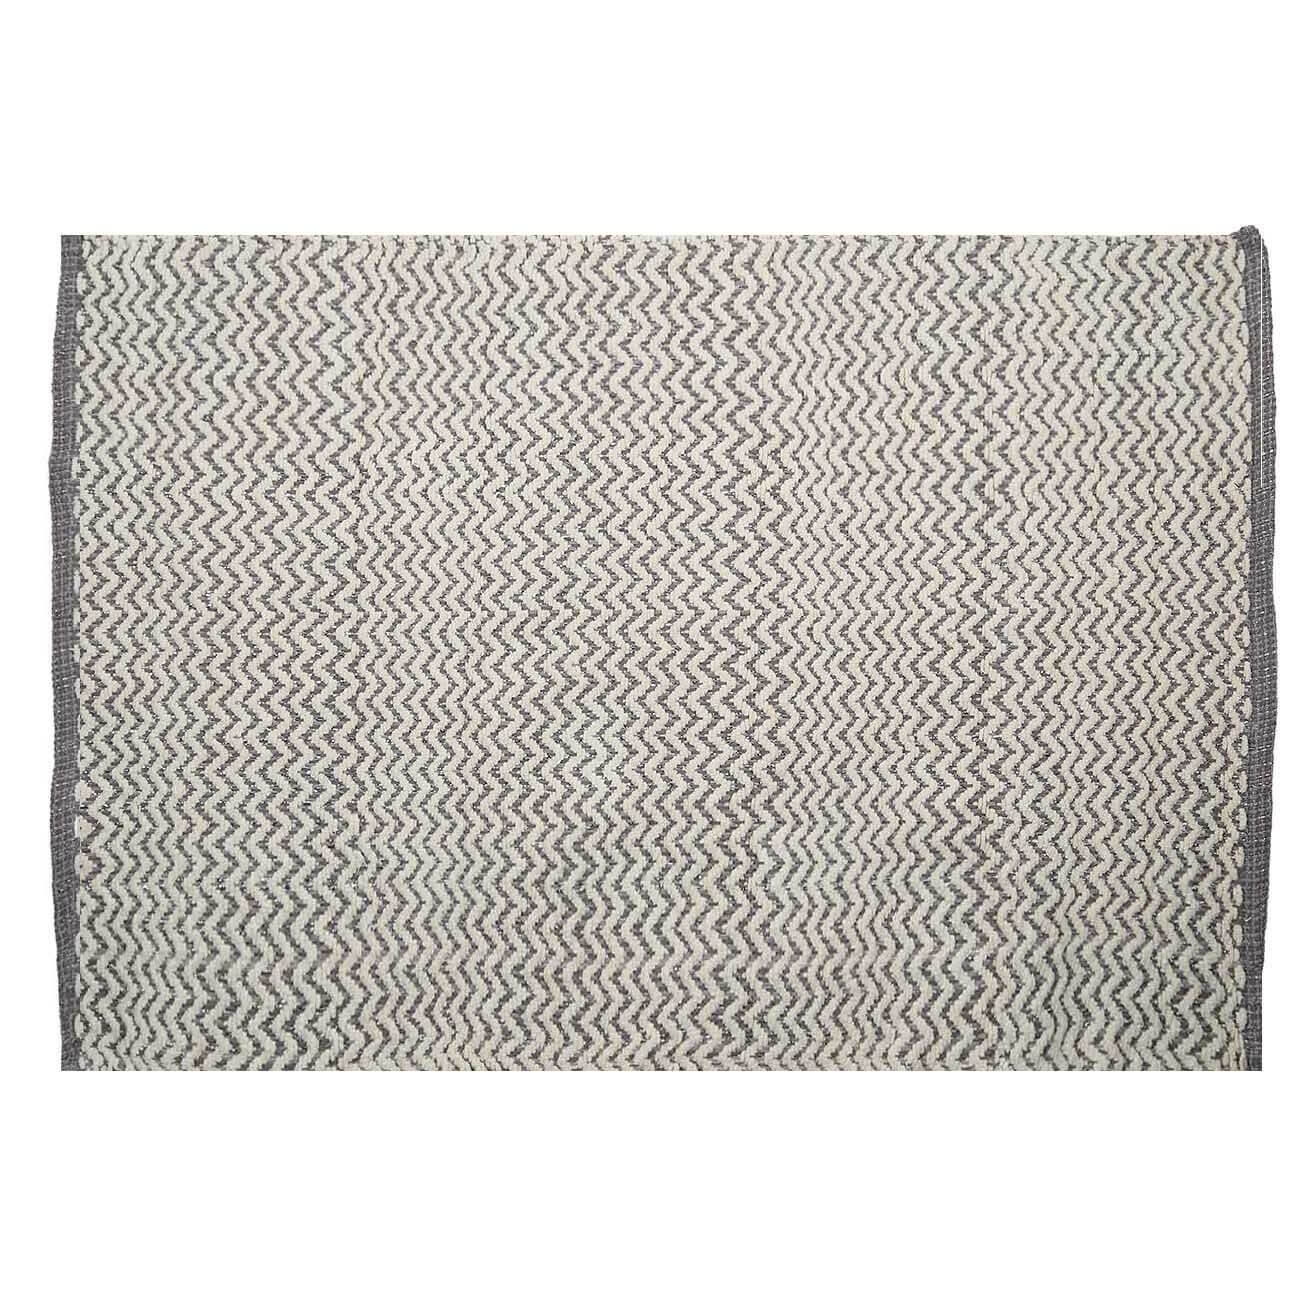 Коврик, 65х100 см, хлопок, бело-серый, Зигзаги с люрексом, Shiny threads коврик для ванной iddis promo p02pa69i12